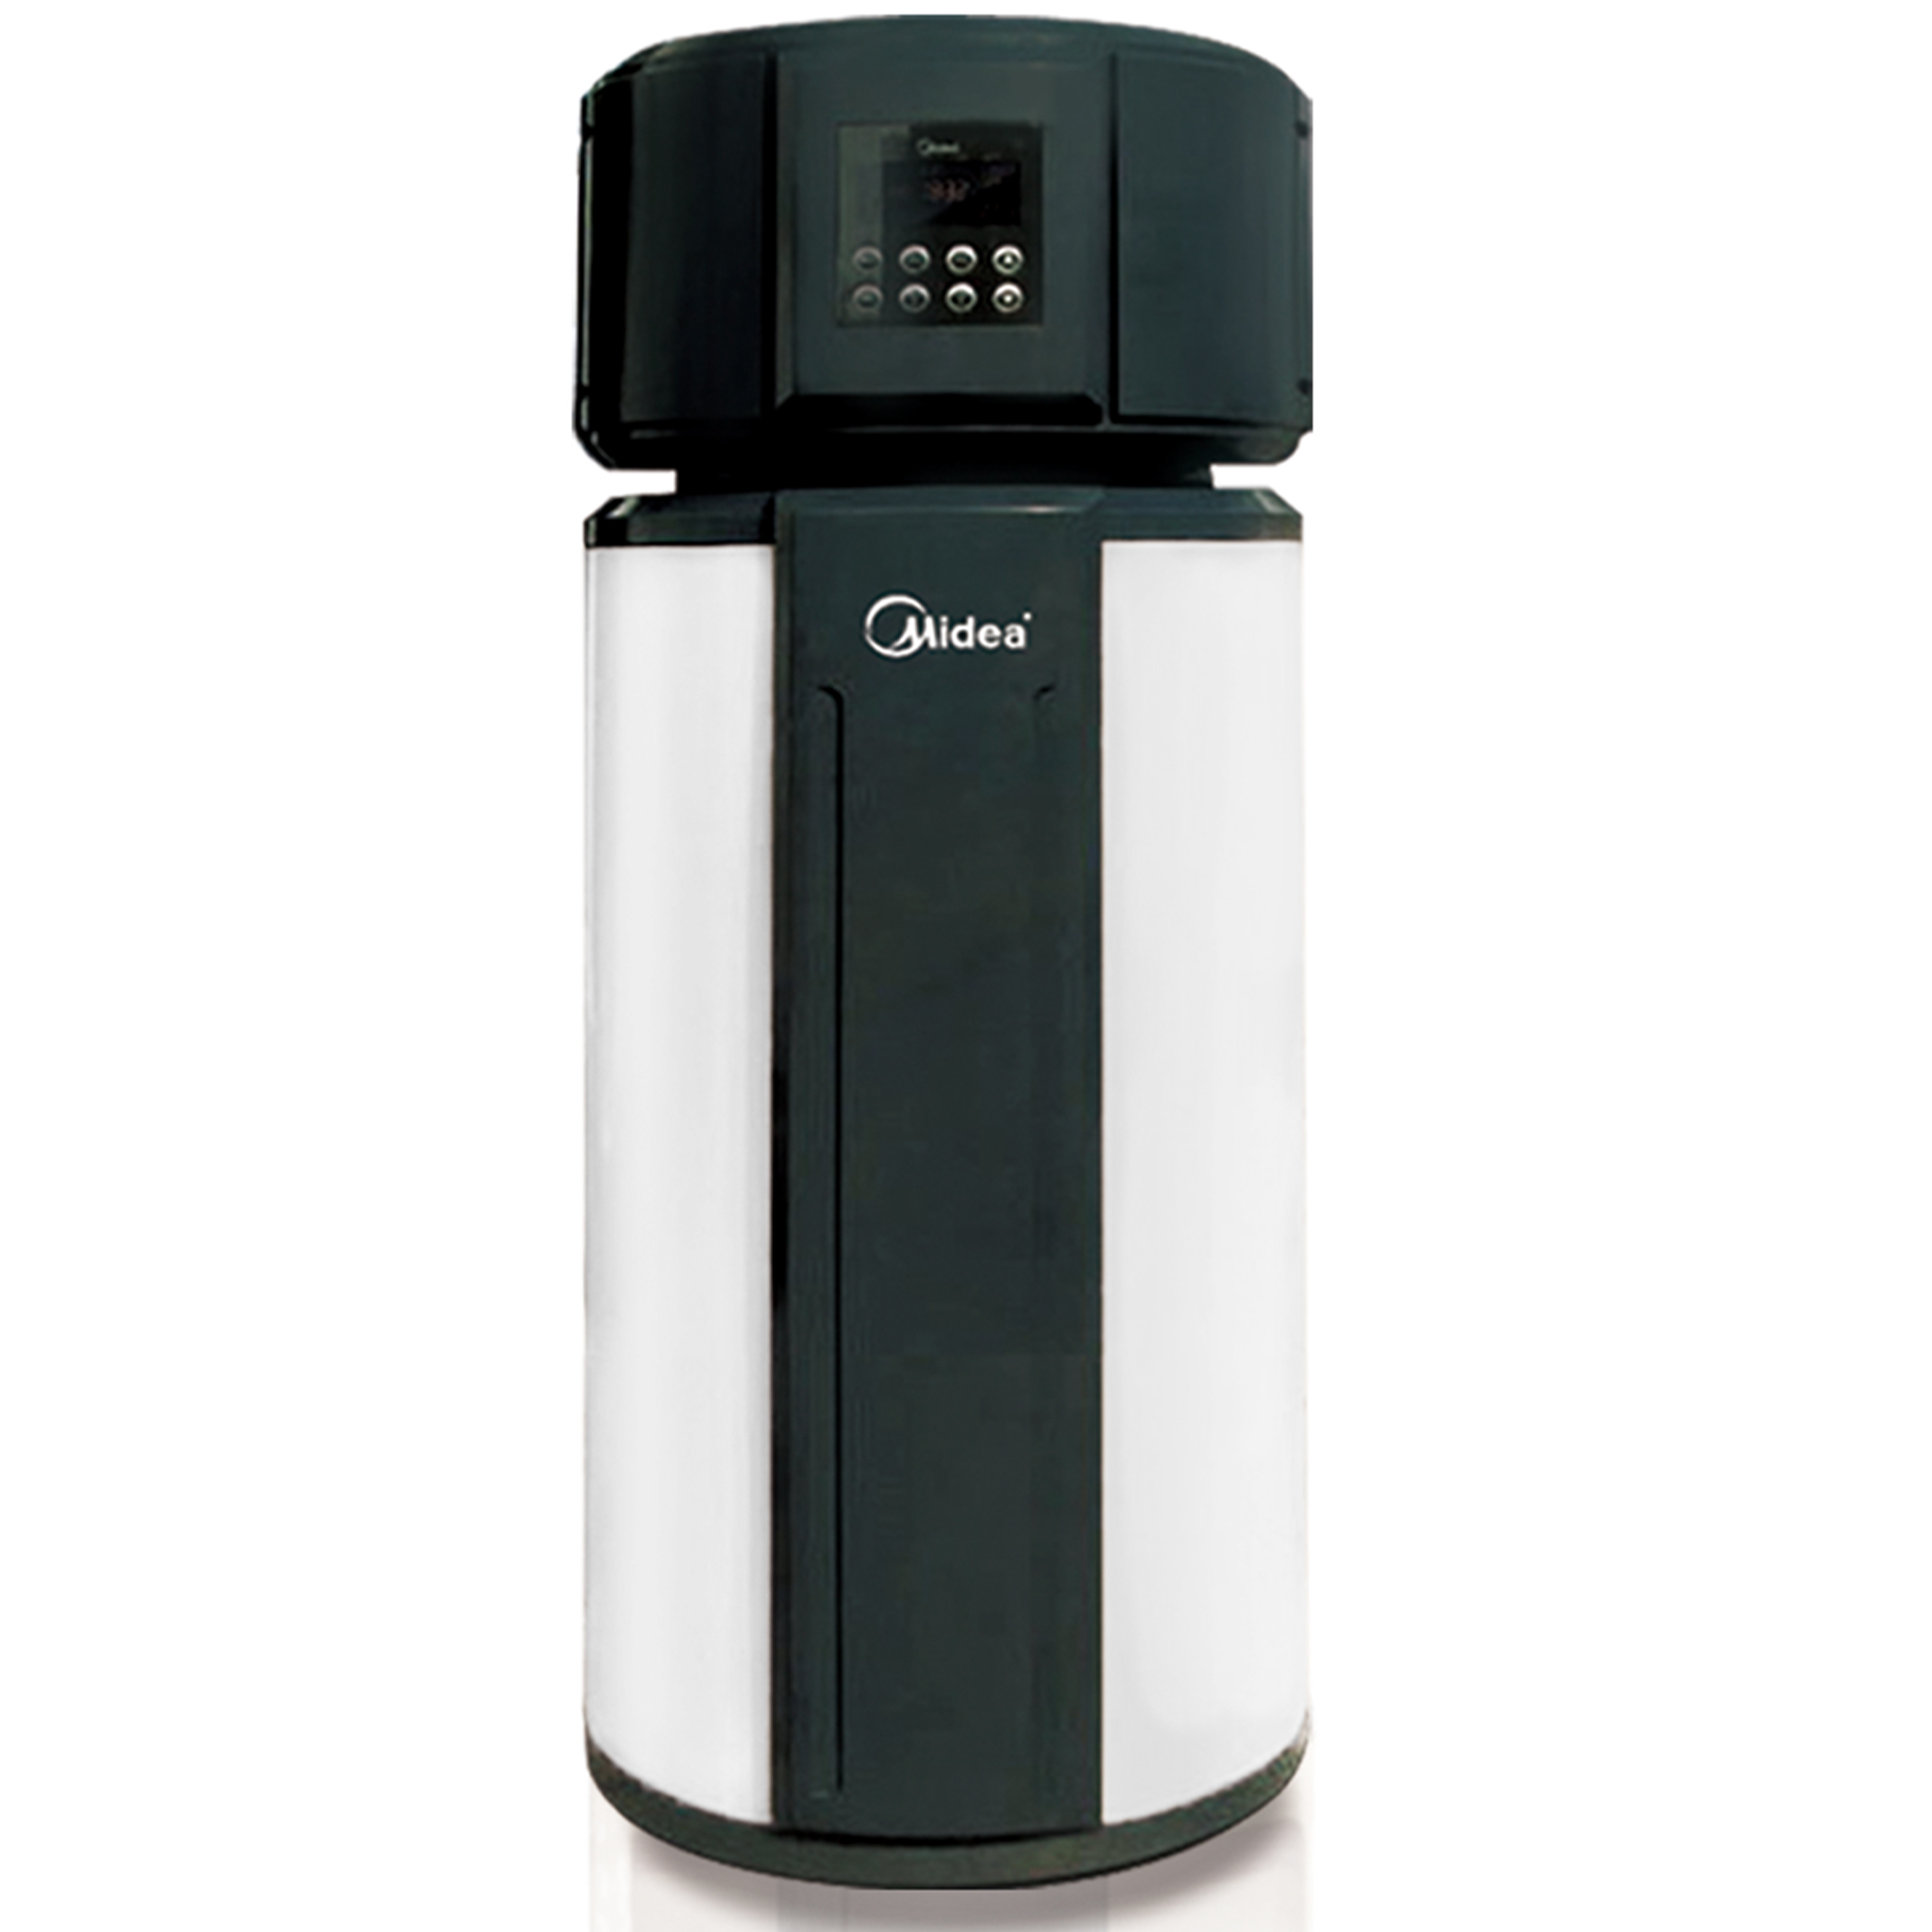 Hot Draft Coffee Dispenser - Medium Volume (220V)